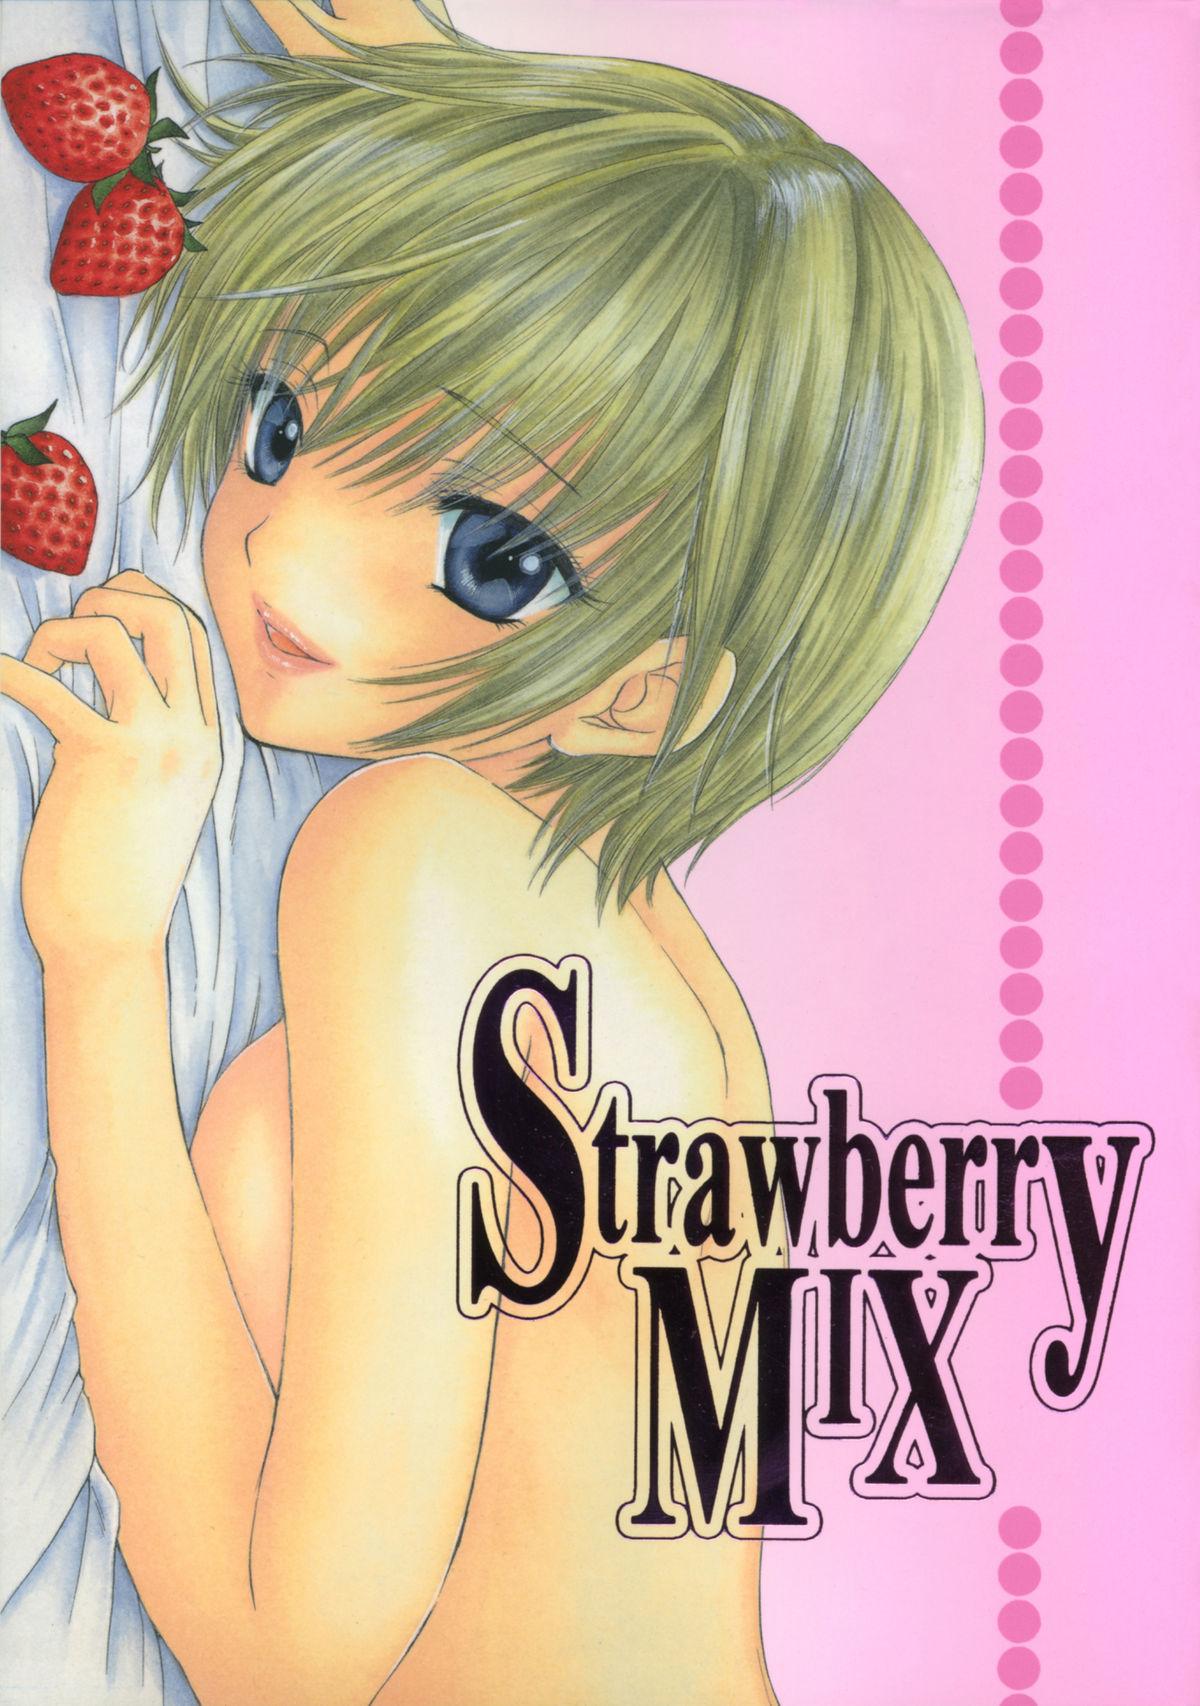 Strawberry MIX 0